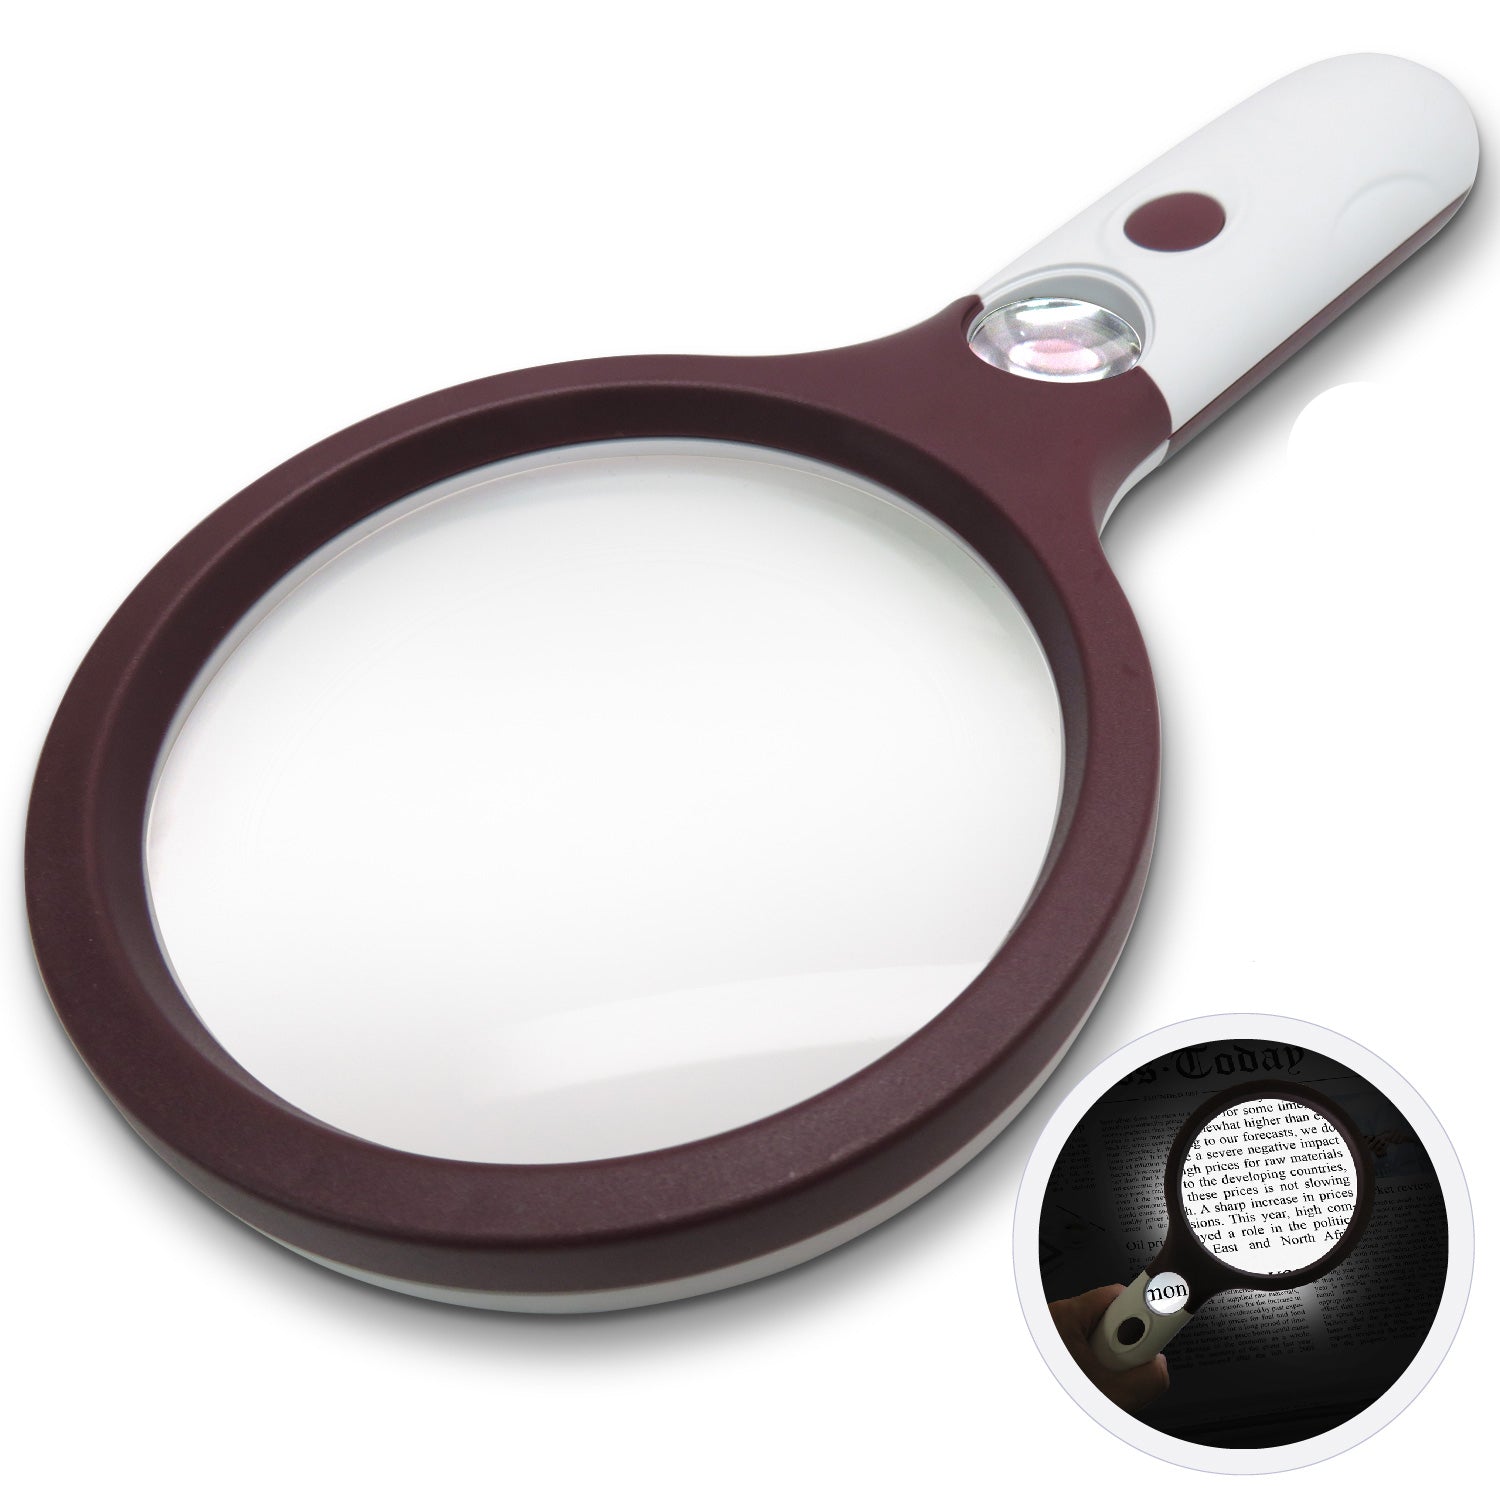 4X Magnifying LED Floor Lamp - Sharper Vision Store